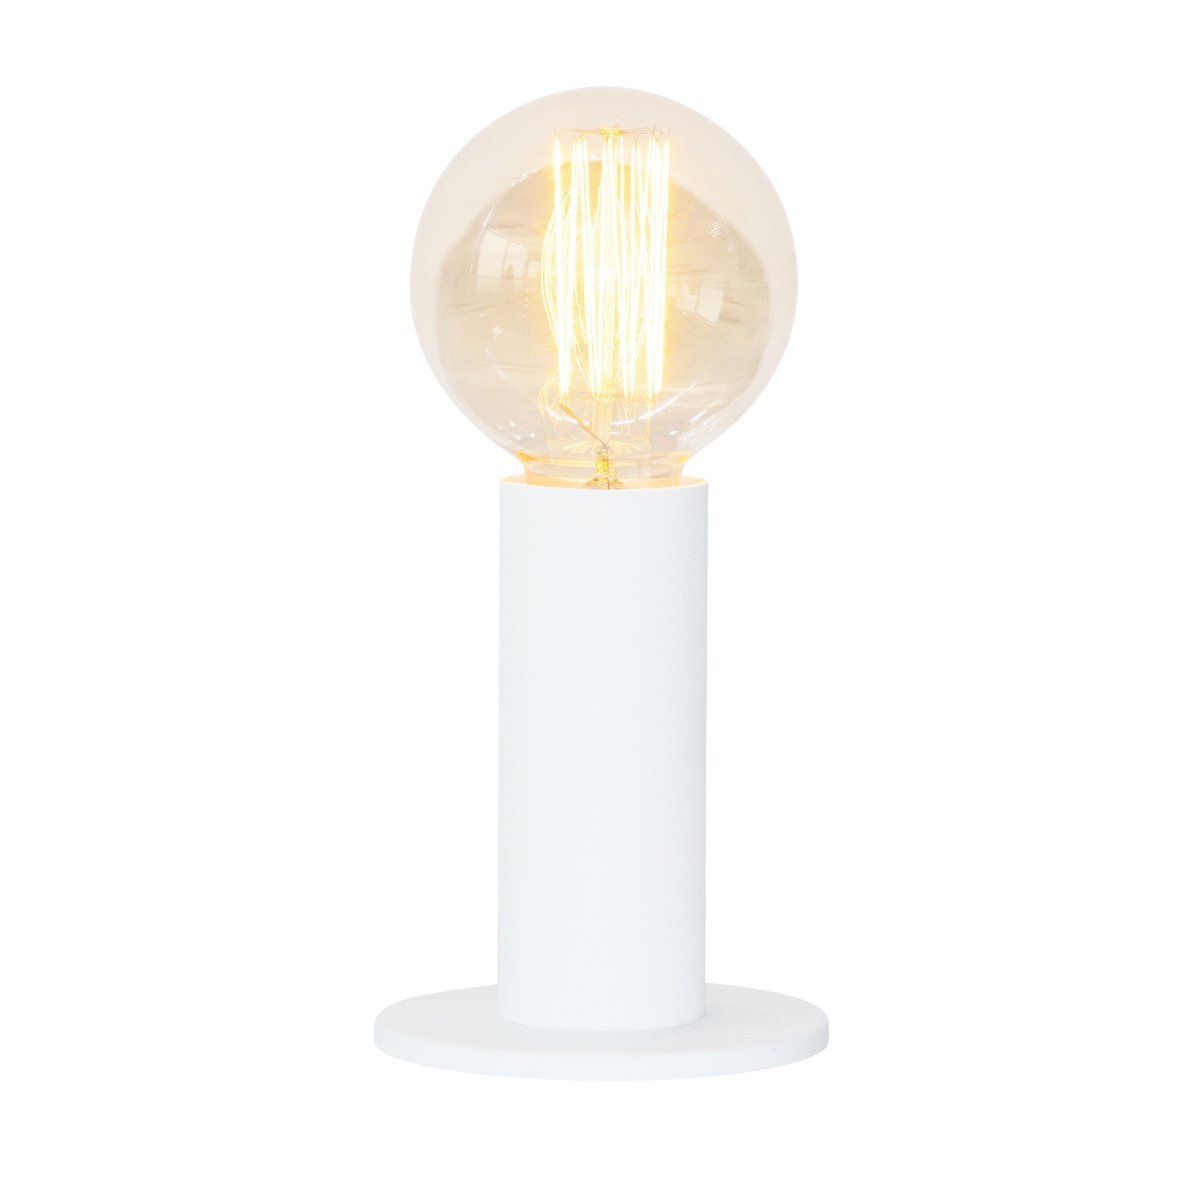 Lampe design EDISON blanche en acier